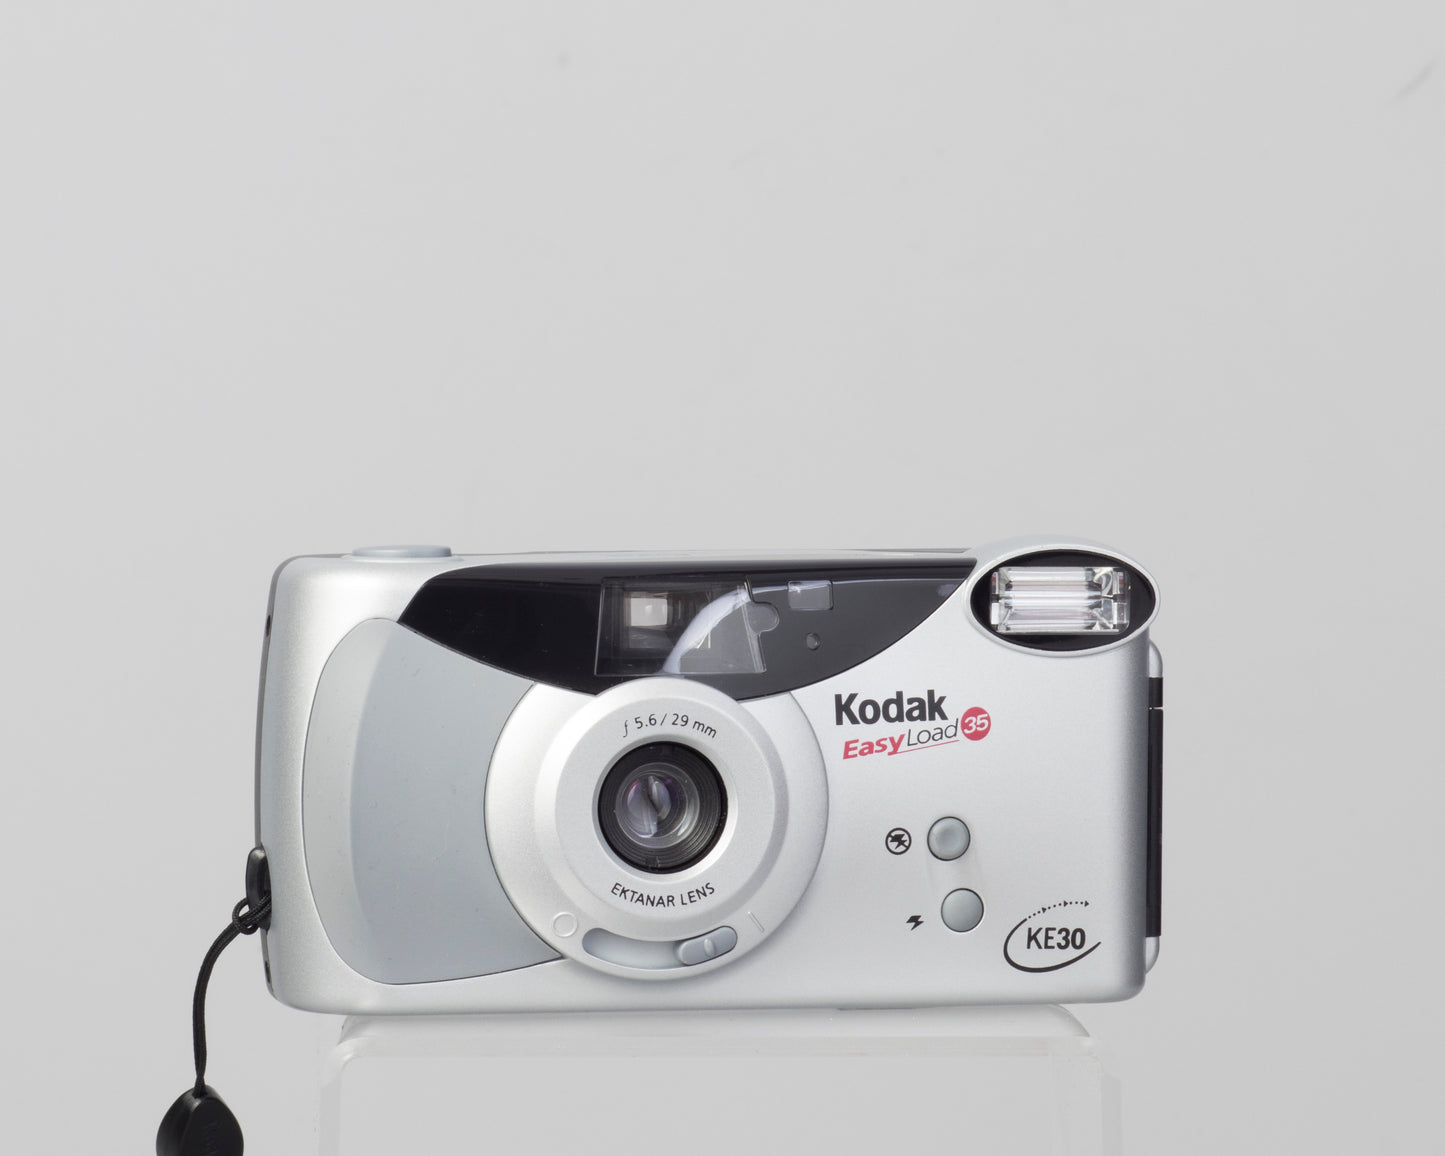 The Kodak KE30 EasyLoad is a very easy to use 35mm film camera